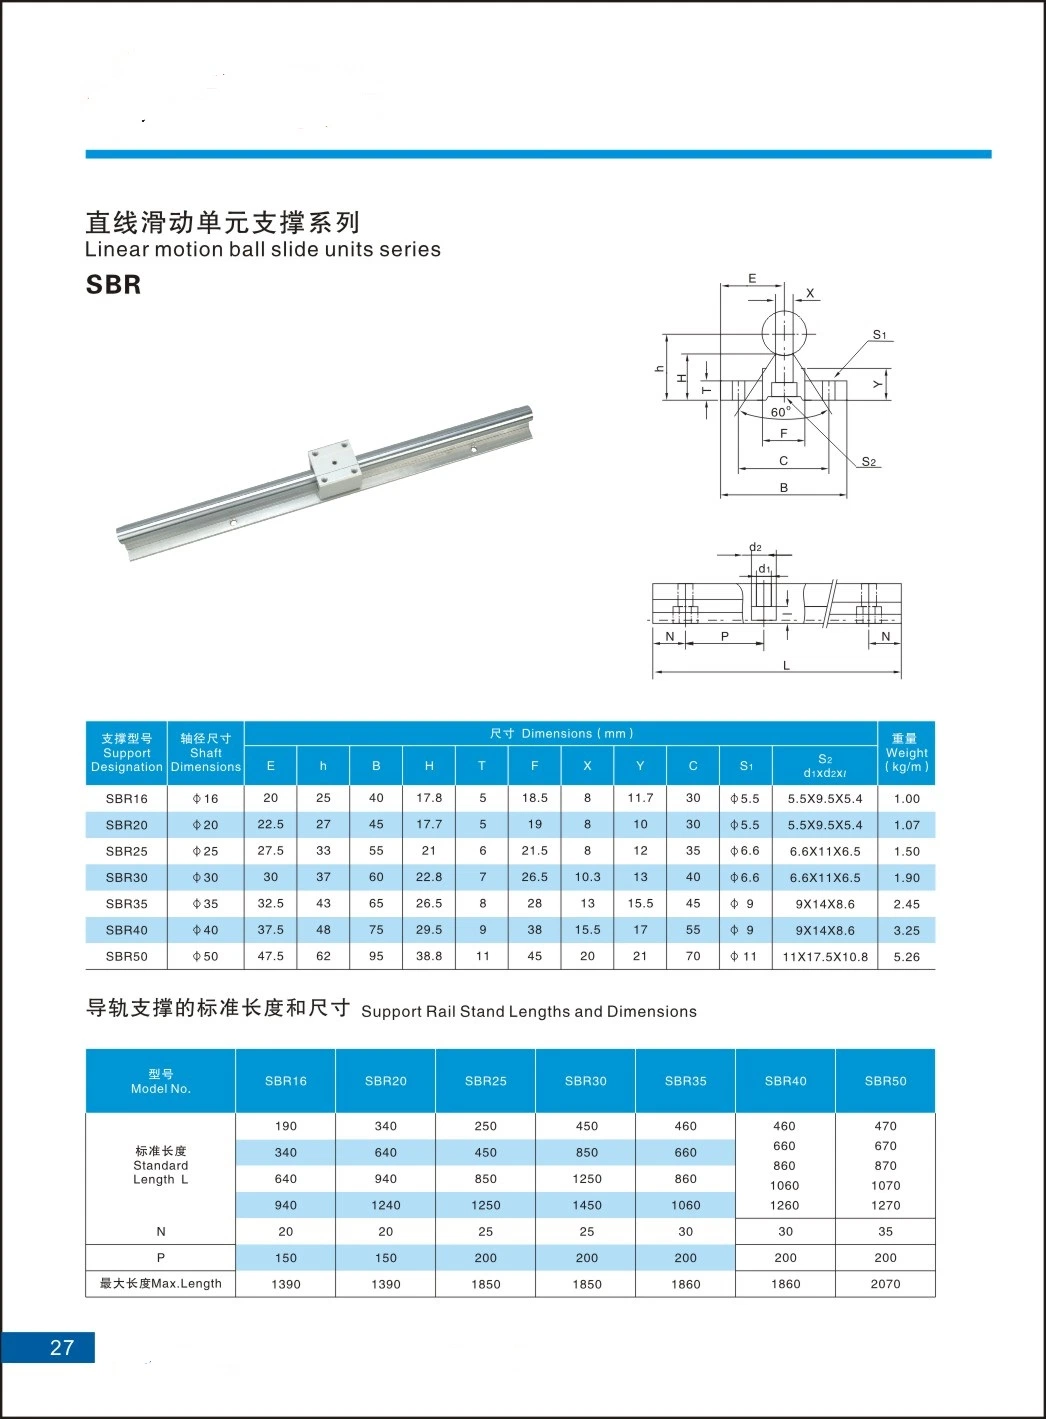 China Professional Linear Bearing Factory /Lm Shaft Motion Bearing/Slide Rail Flange Bearing /Linear Guide Rail Block/Linear Pillow Block Ball Bearing